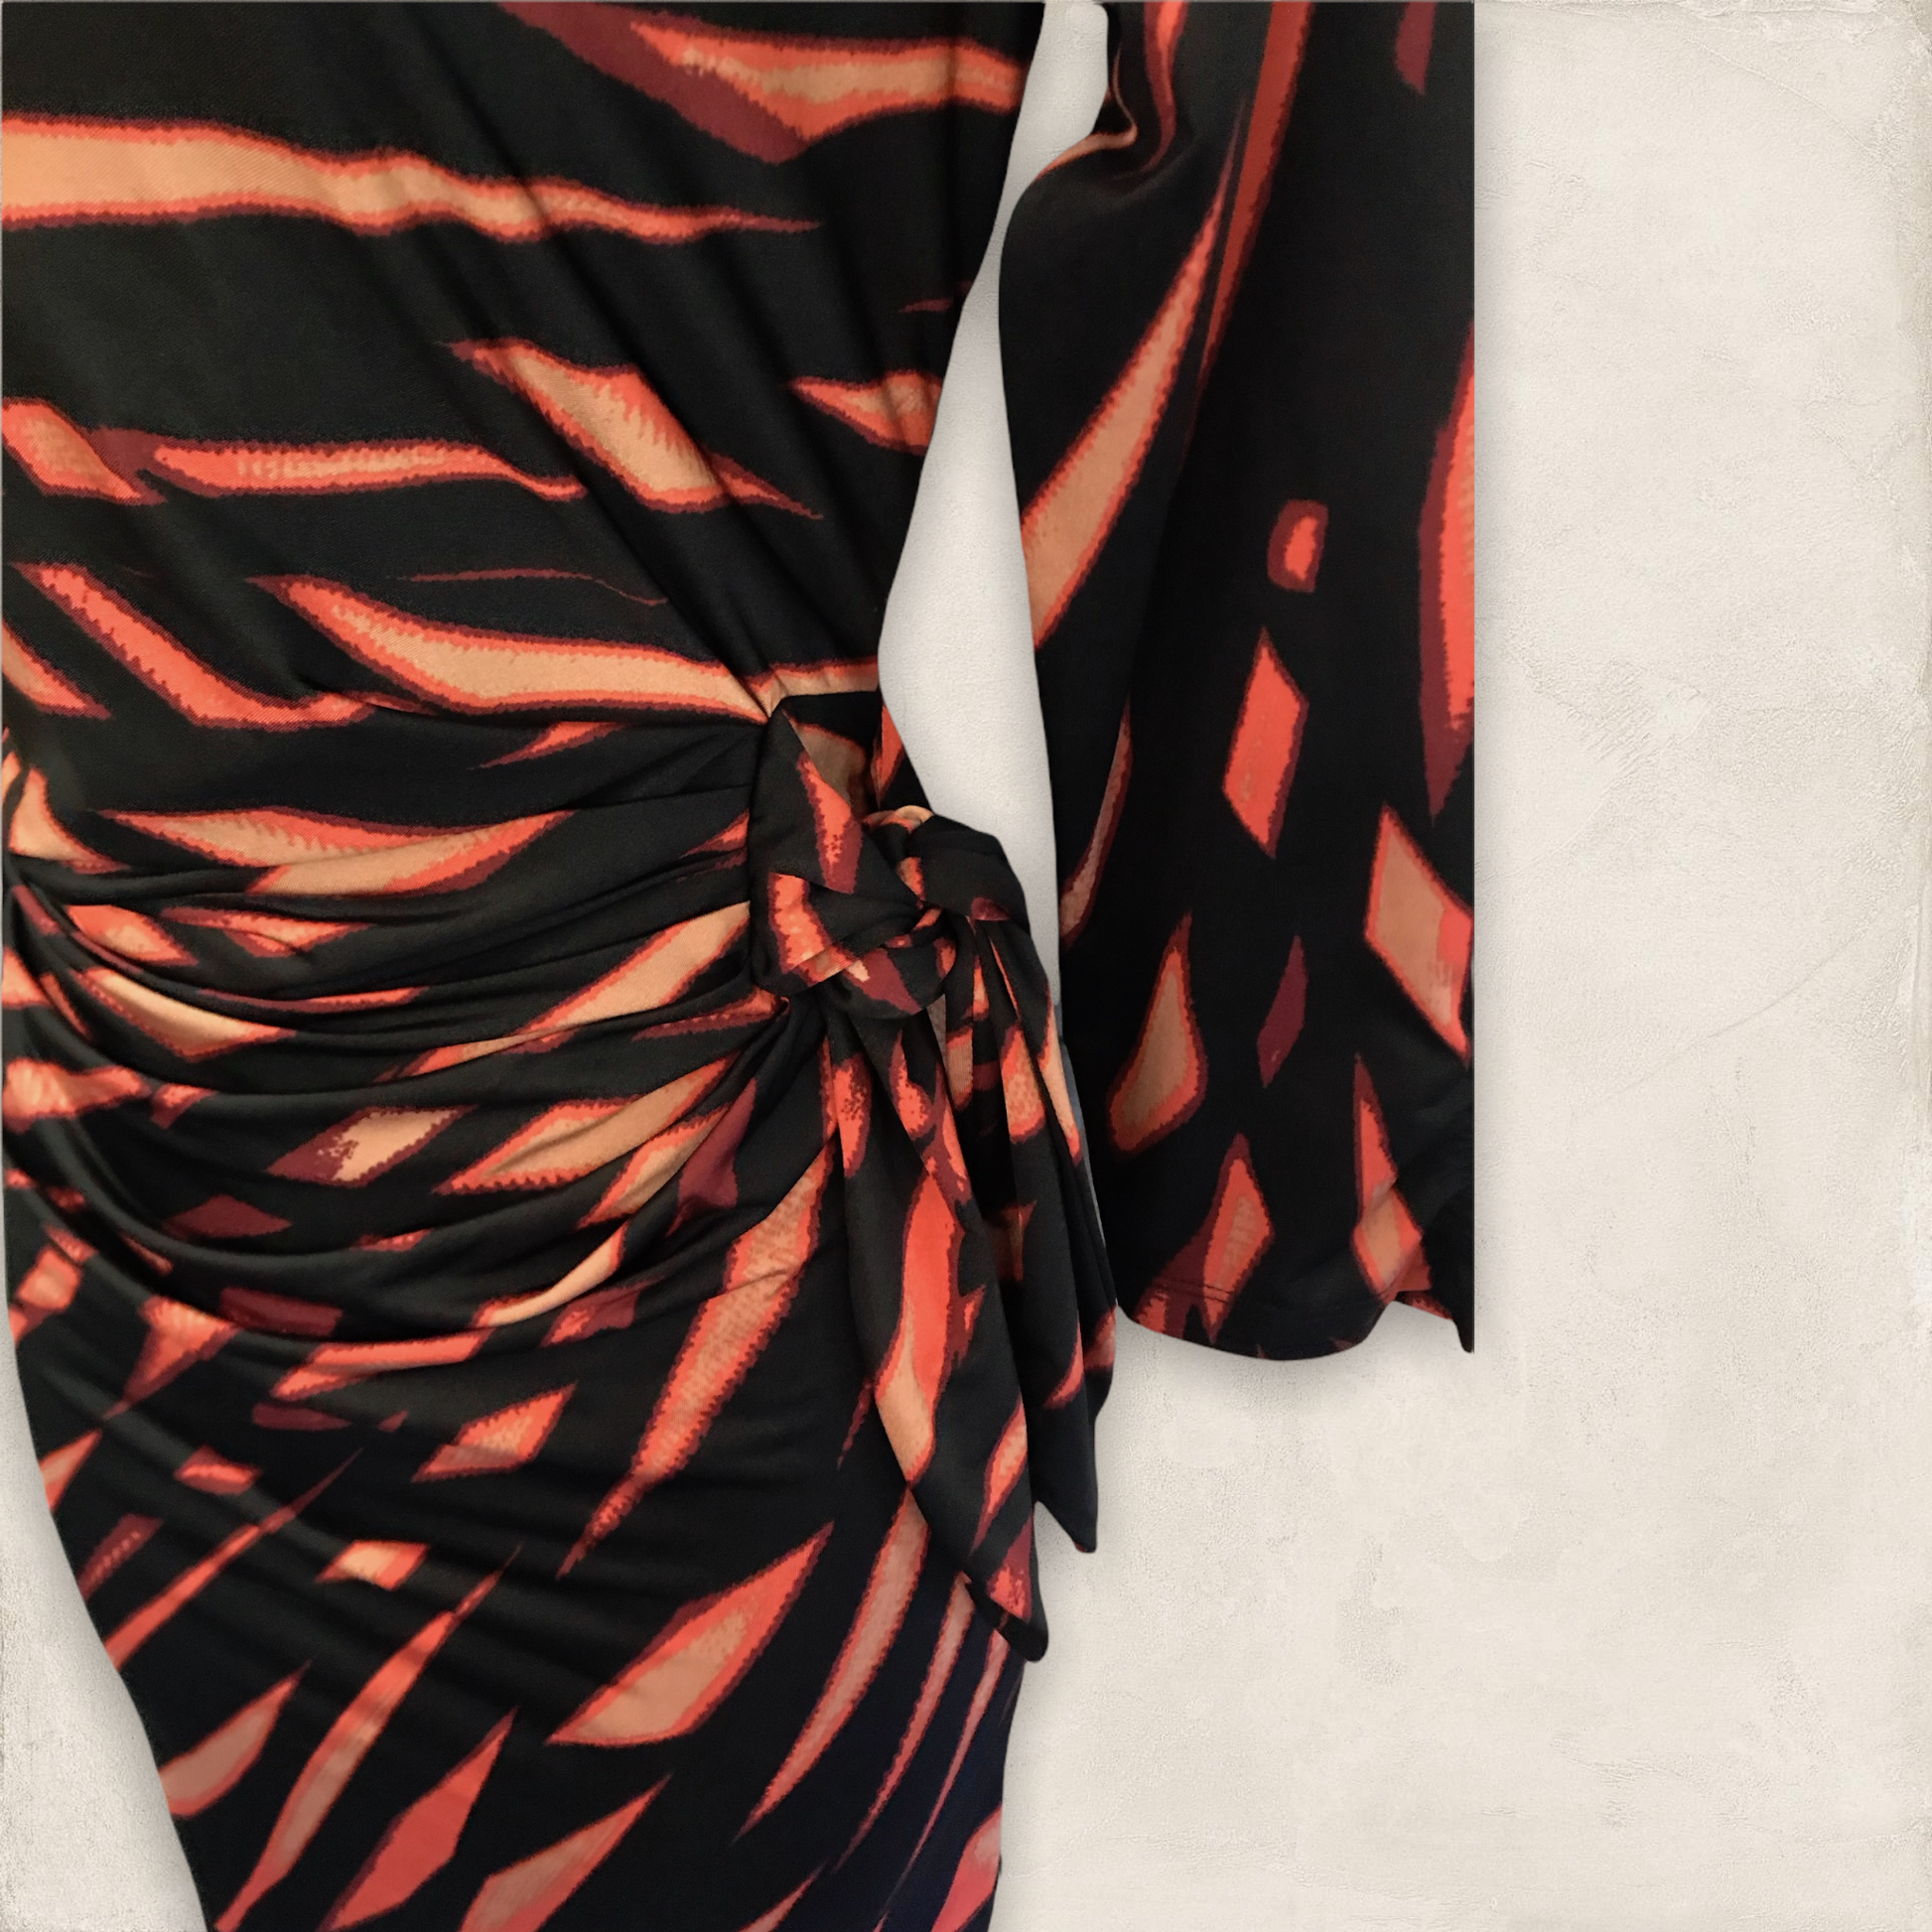 Pomodoro Black & Orange Stretch Drape Dress UK 8 US 4 EU 36 BNWT RRP £96.95 Timeless Fashions